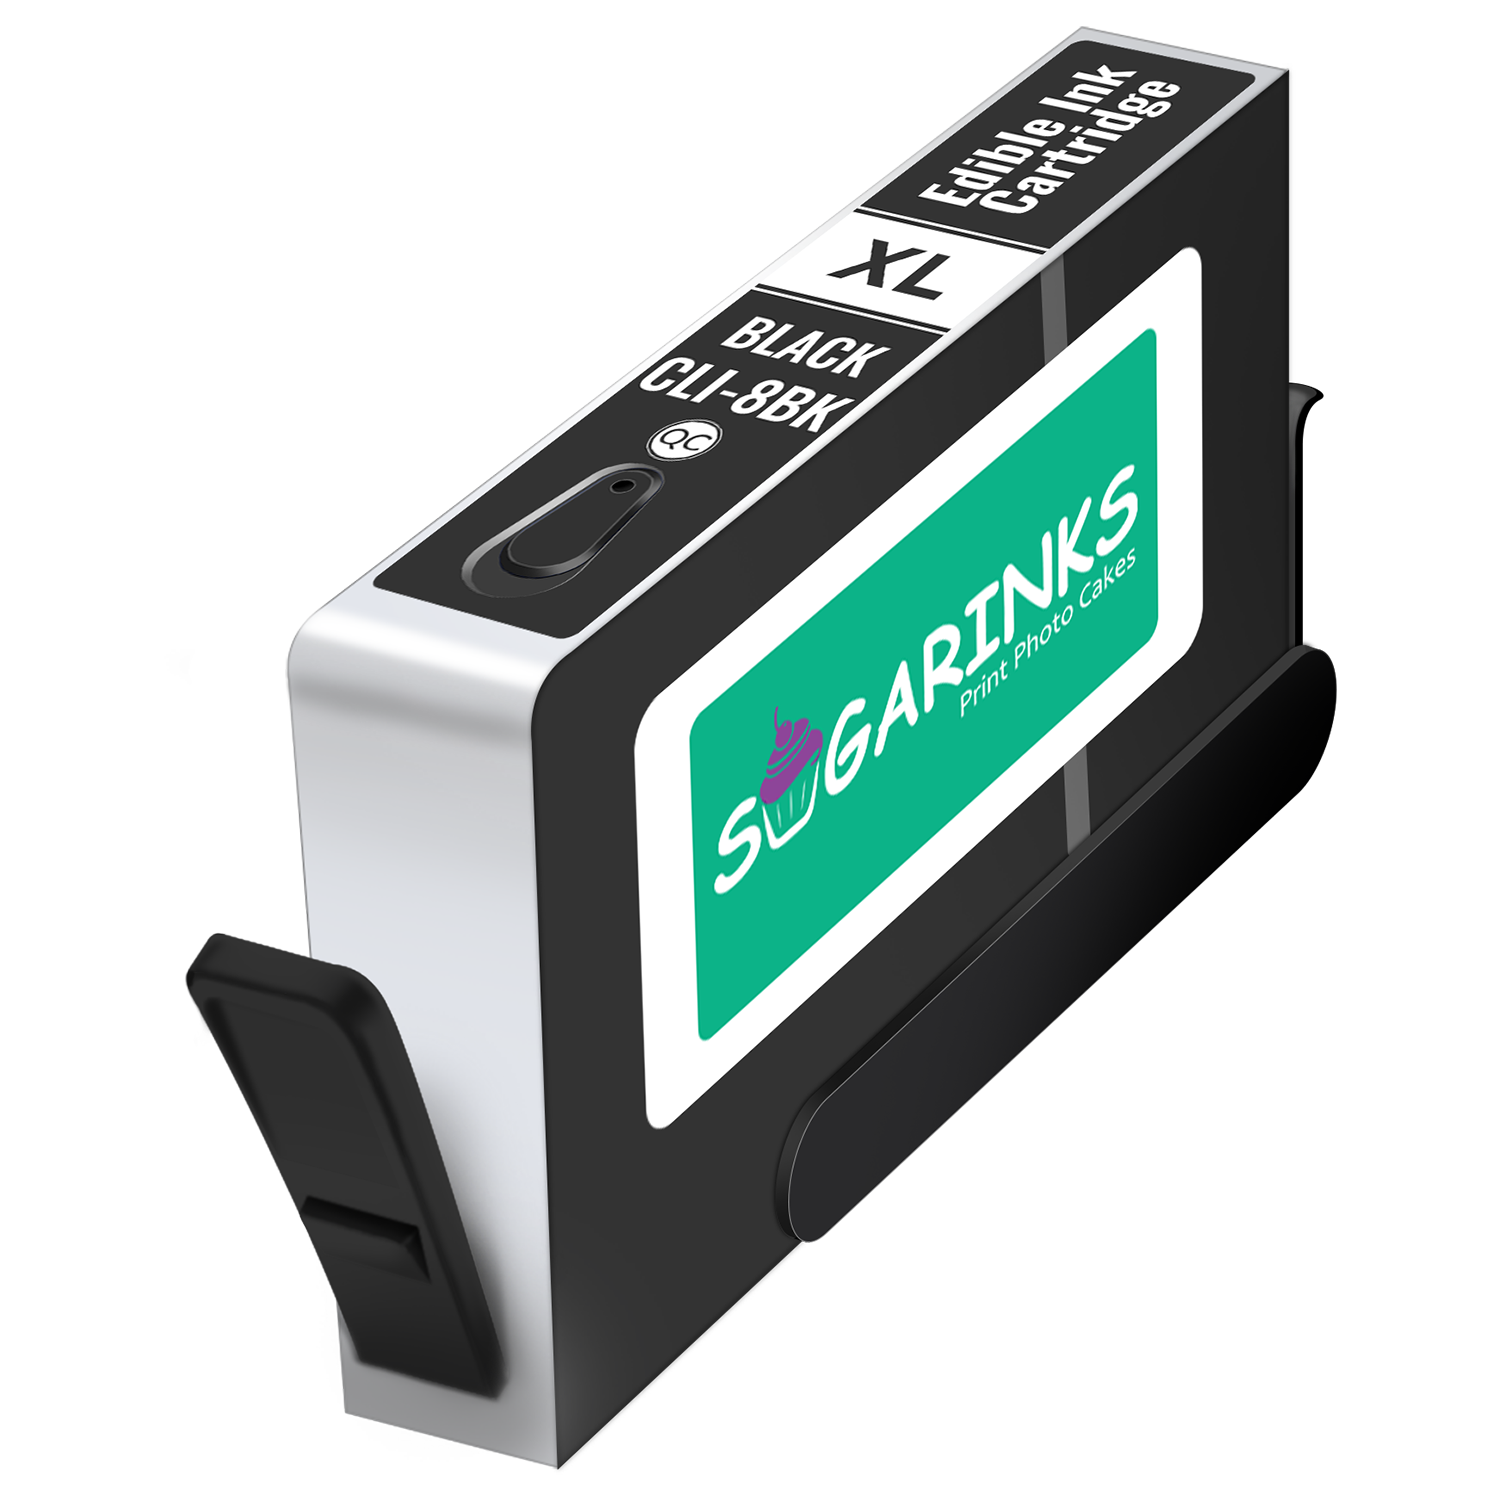 Sugarinks Edible Ink Cartridge CLI-8BK for Canon Edible Printers – Black 